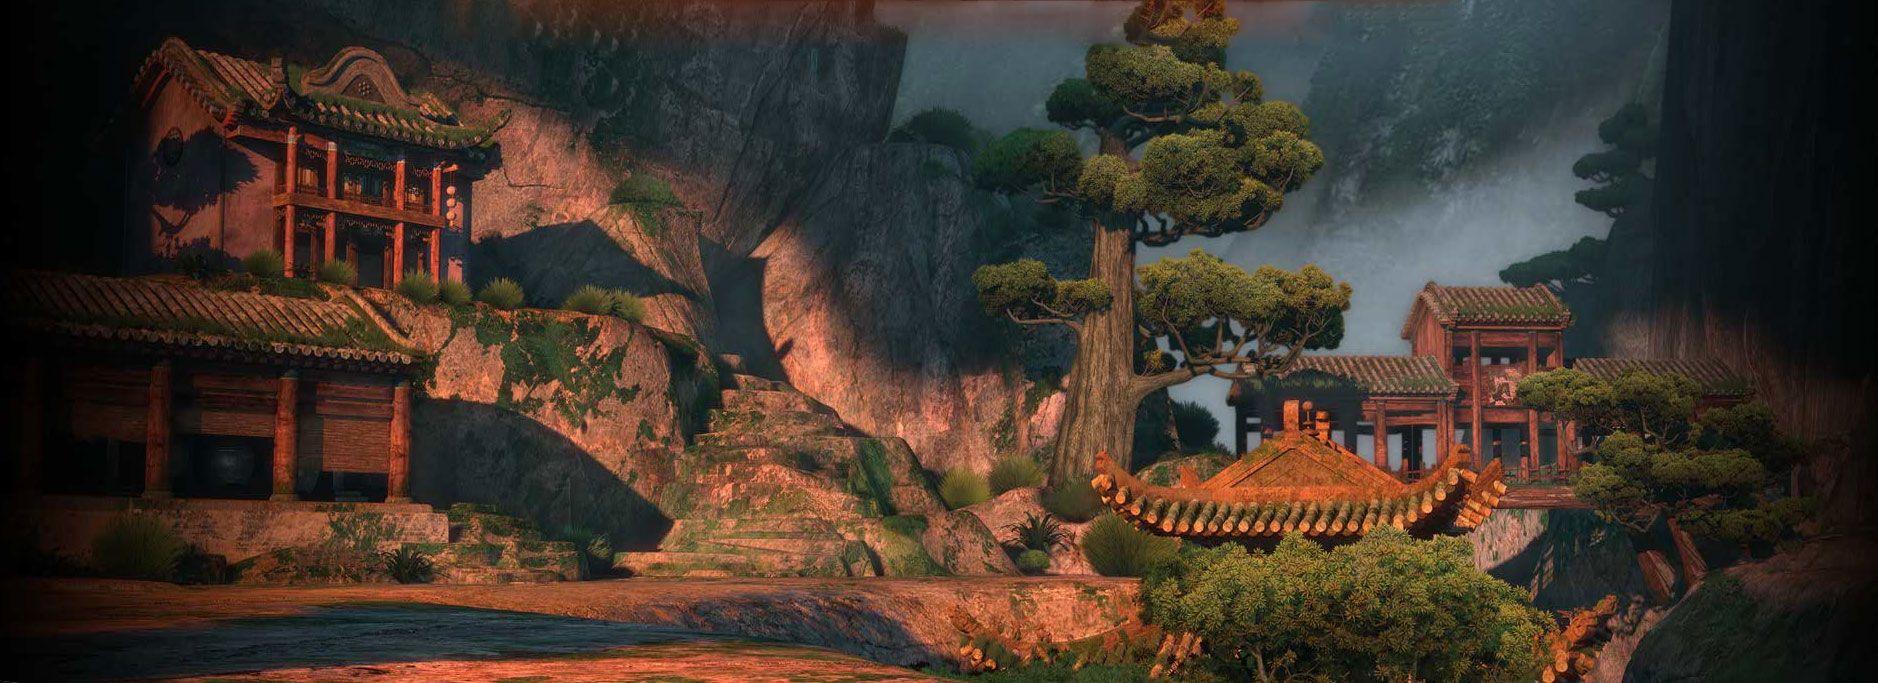 Temple from Kung Fu Panda 2 Desktop Wallpaper